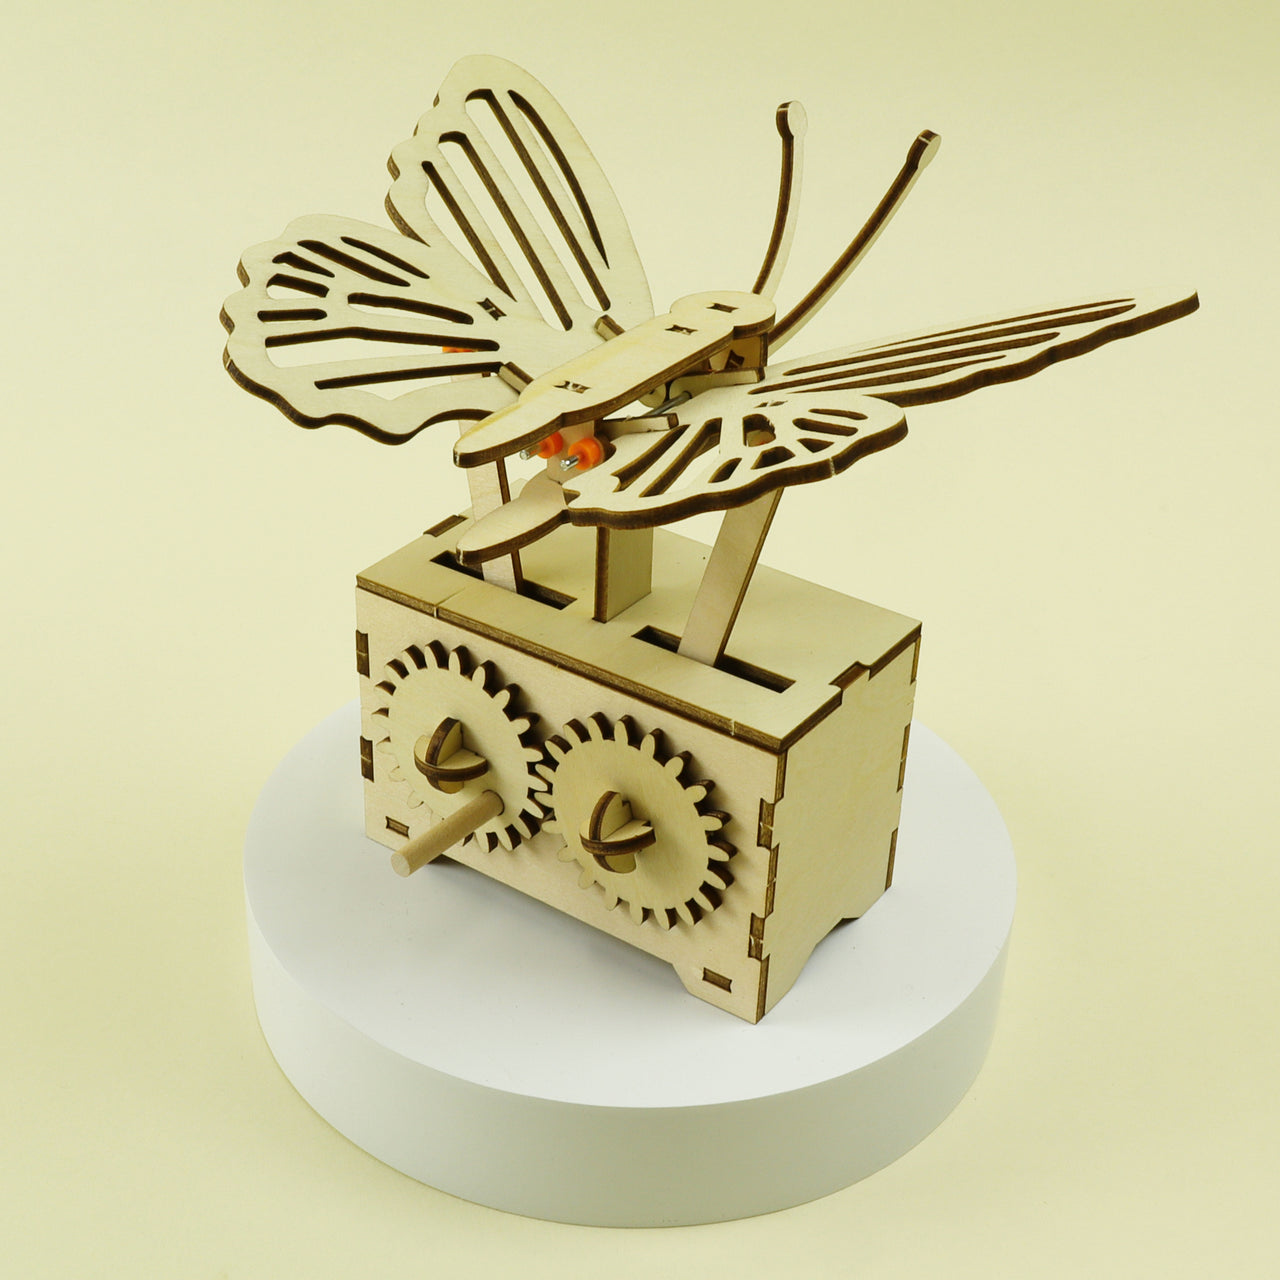 Kit de bricolage CreateKit papillon flottant